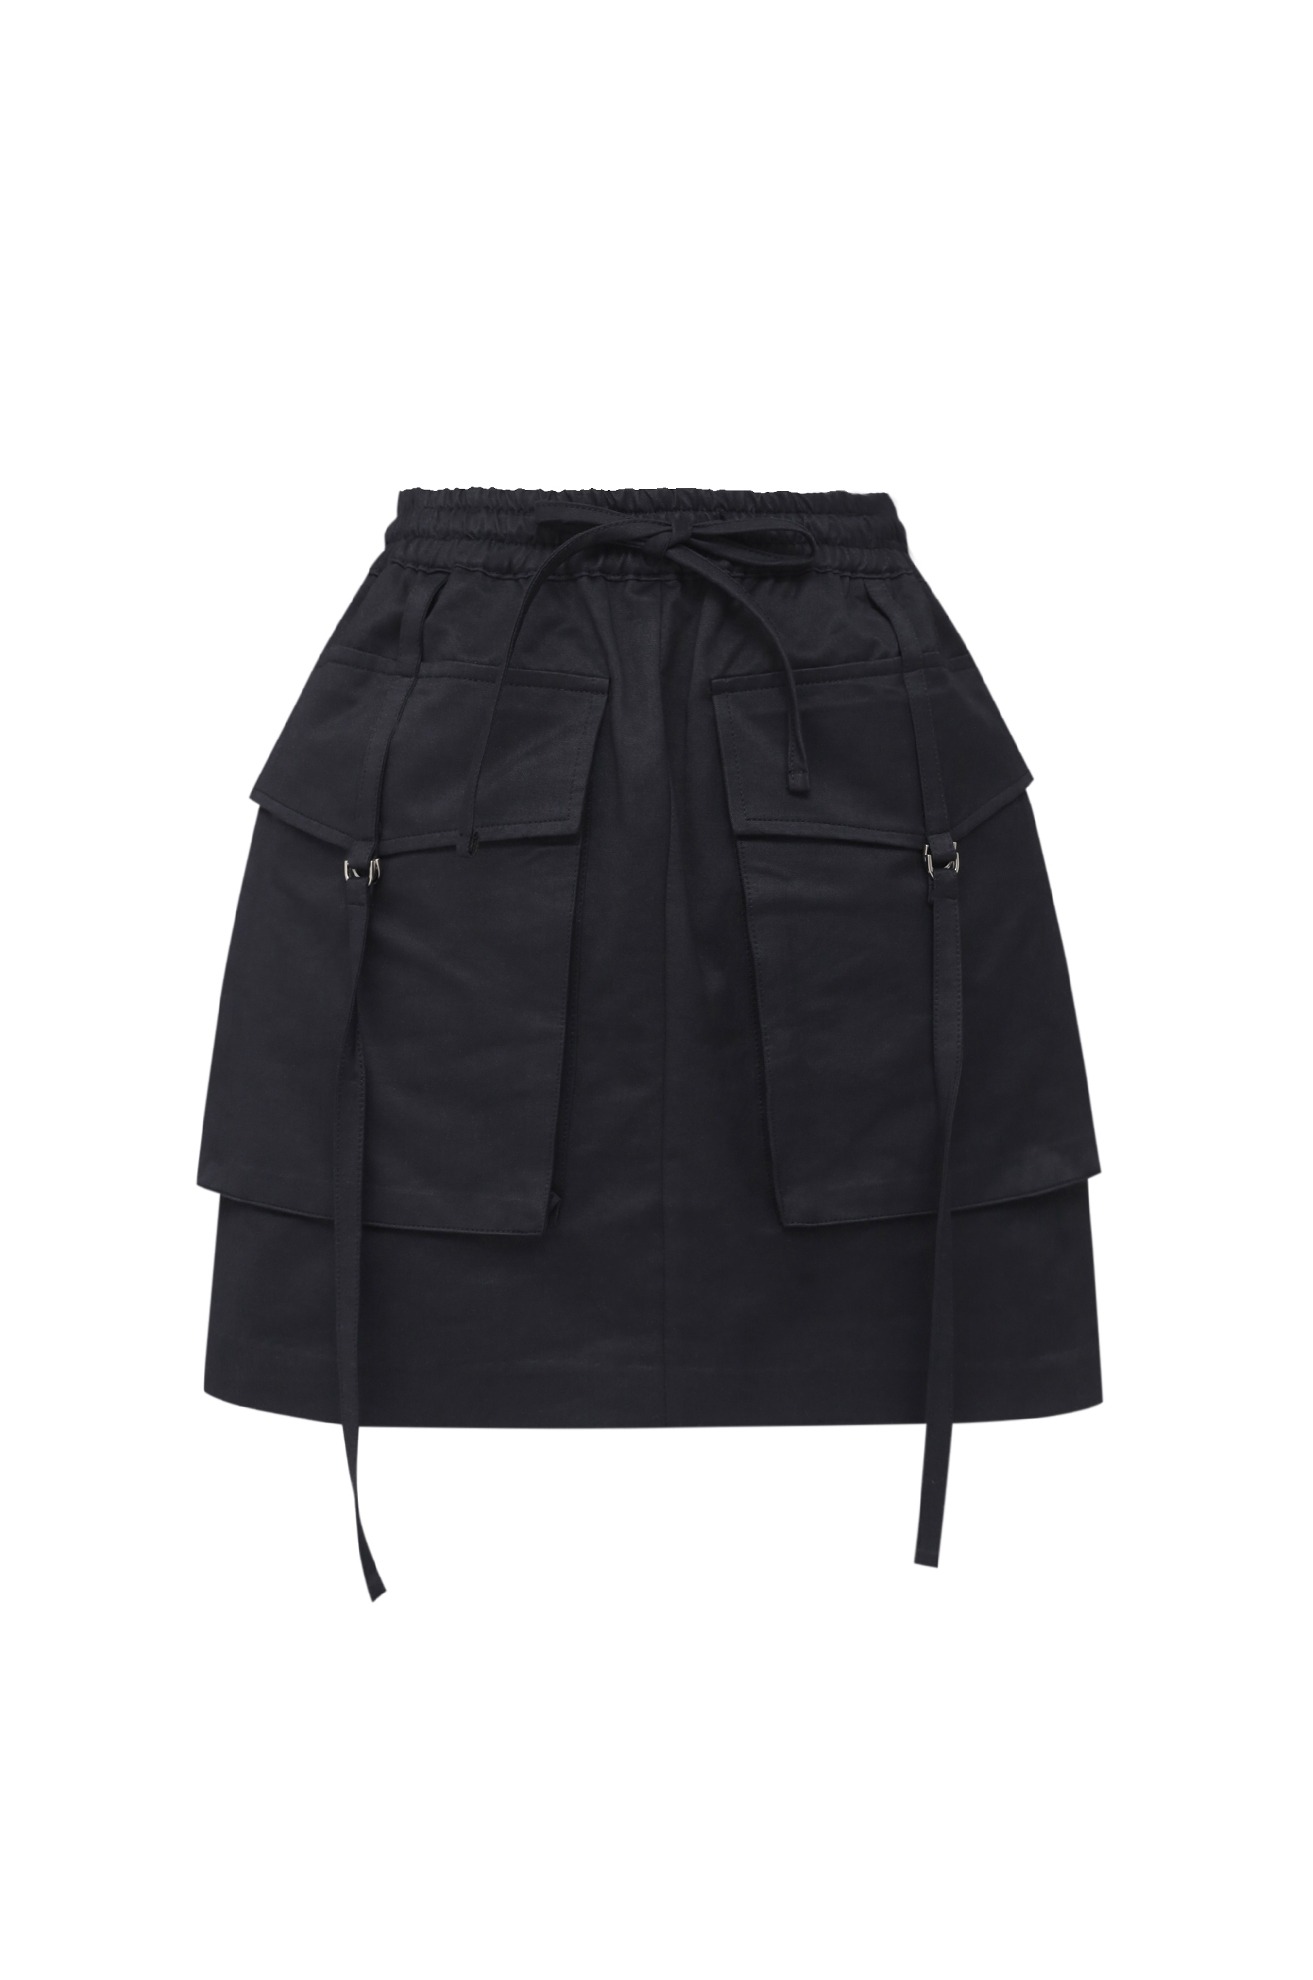 Big Pocket String Skirt  4/7 순차발송